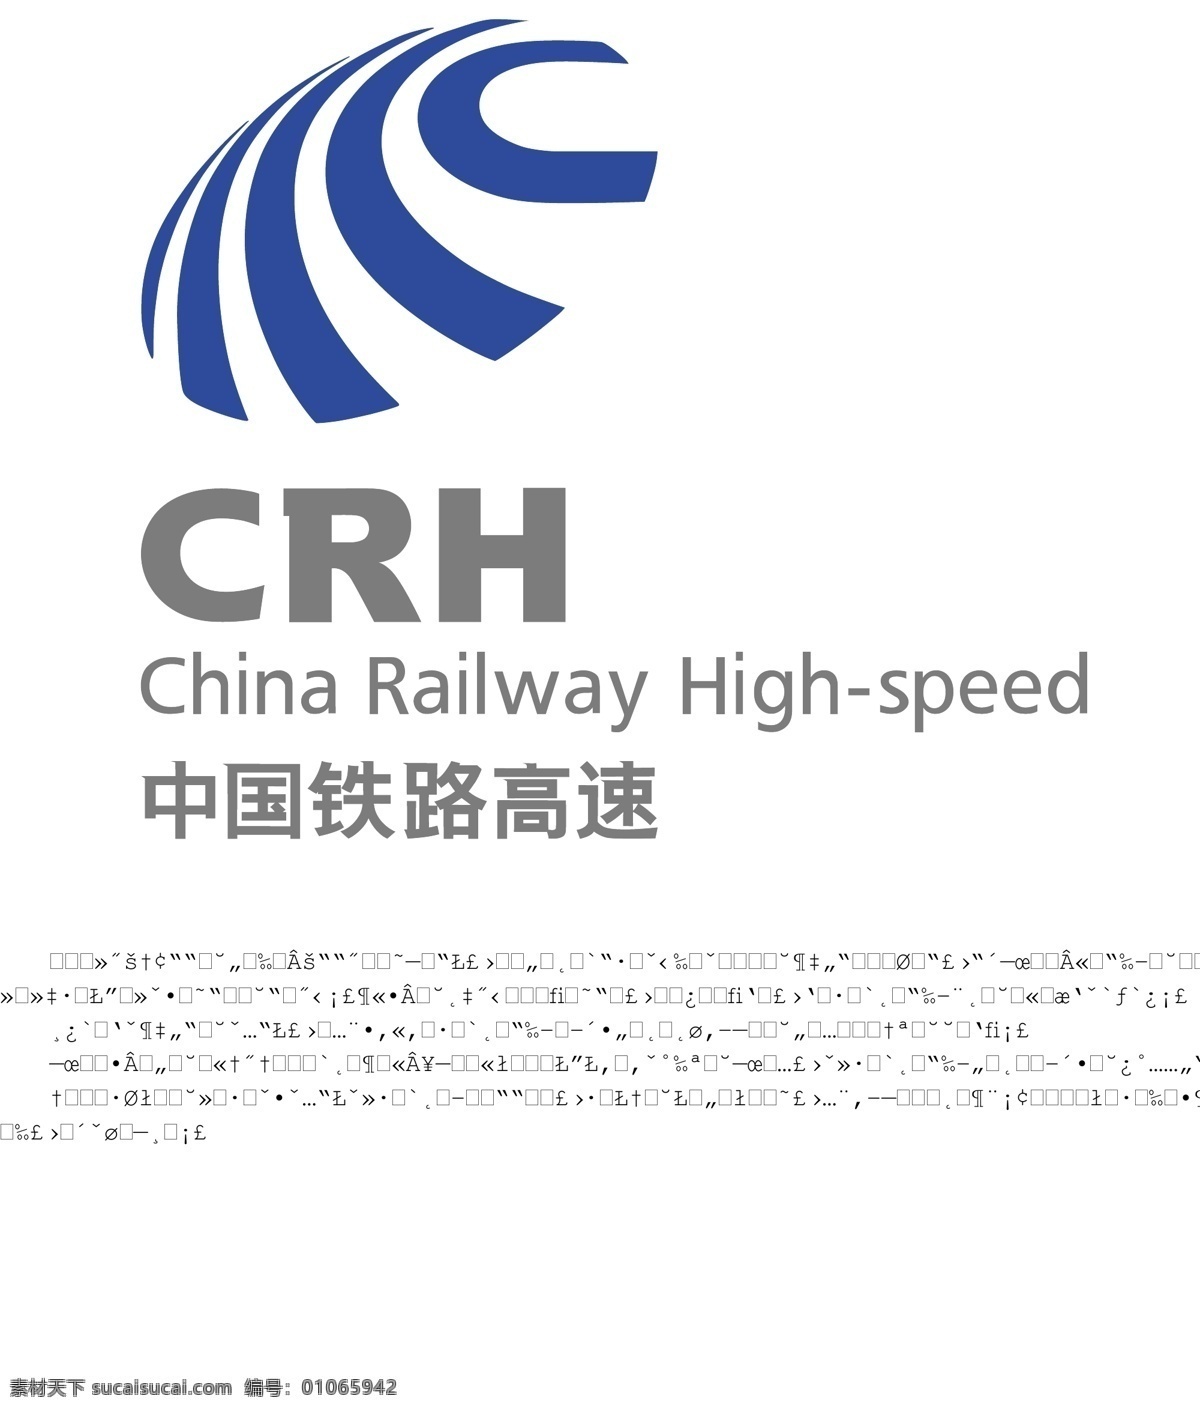 crh 和谐 号 标志 和谐号 高铁 火车站 高速列车 标志图标 公共标识标志